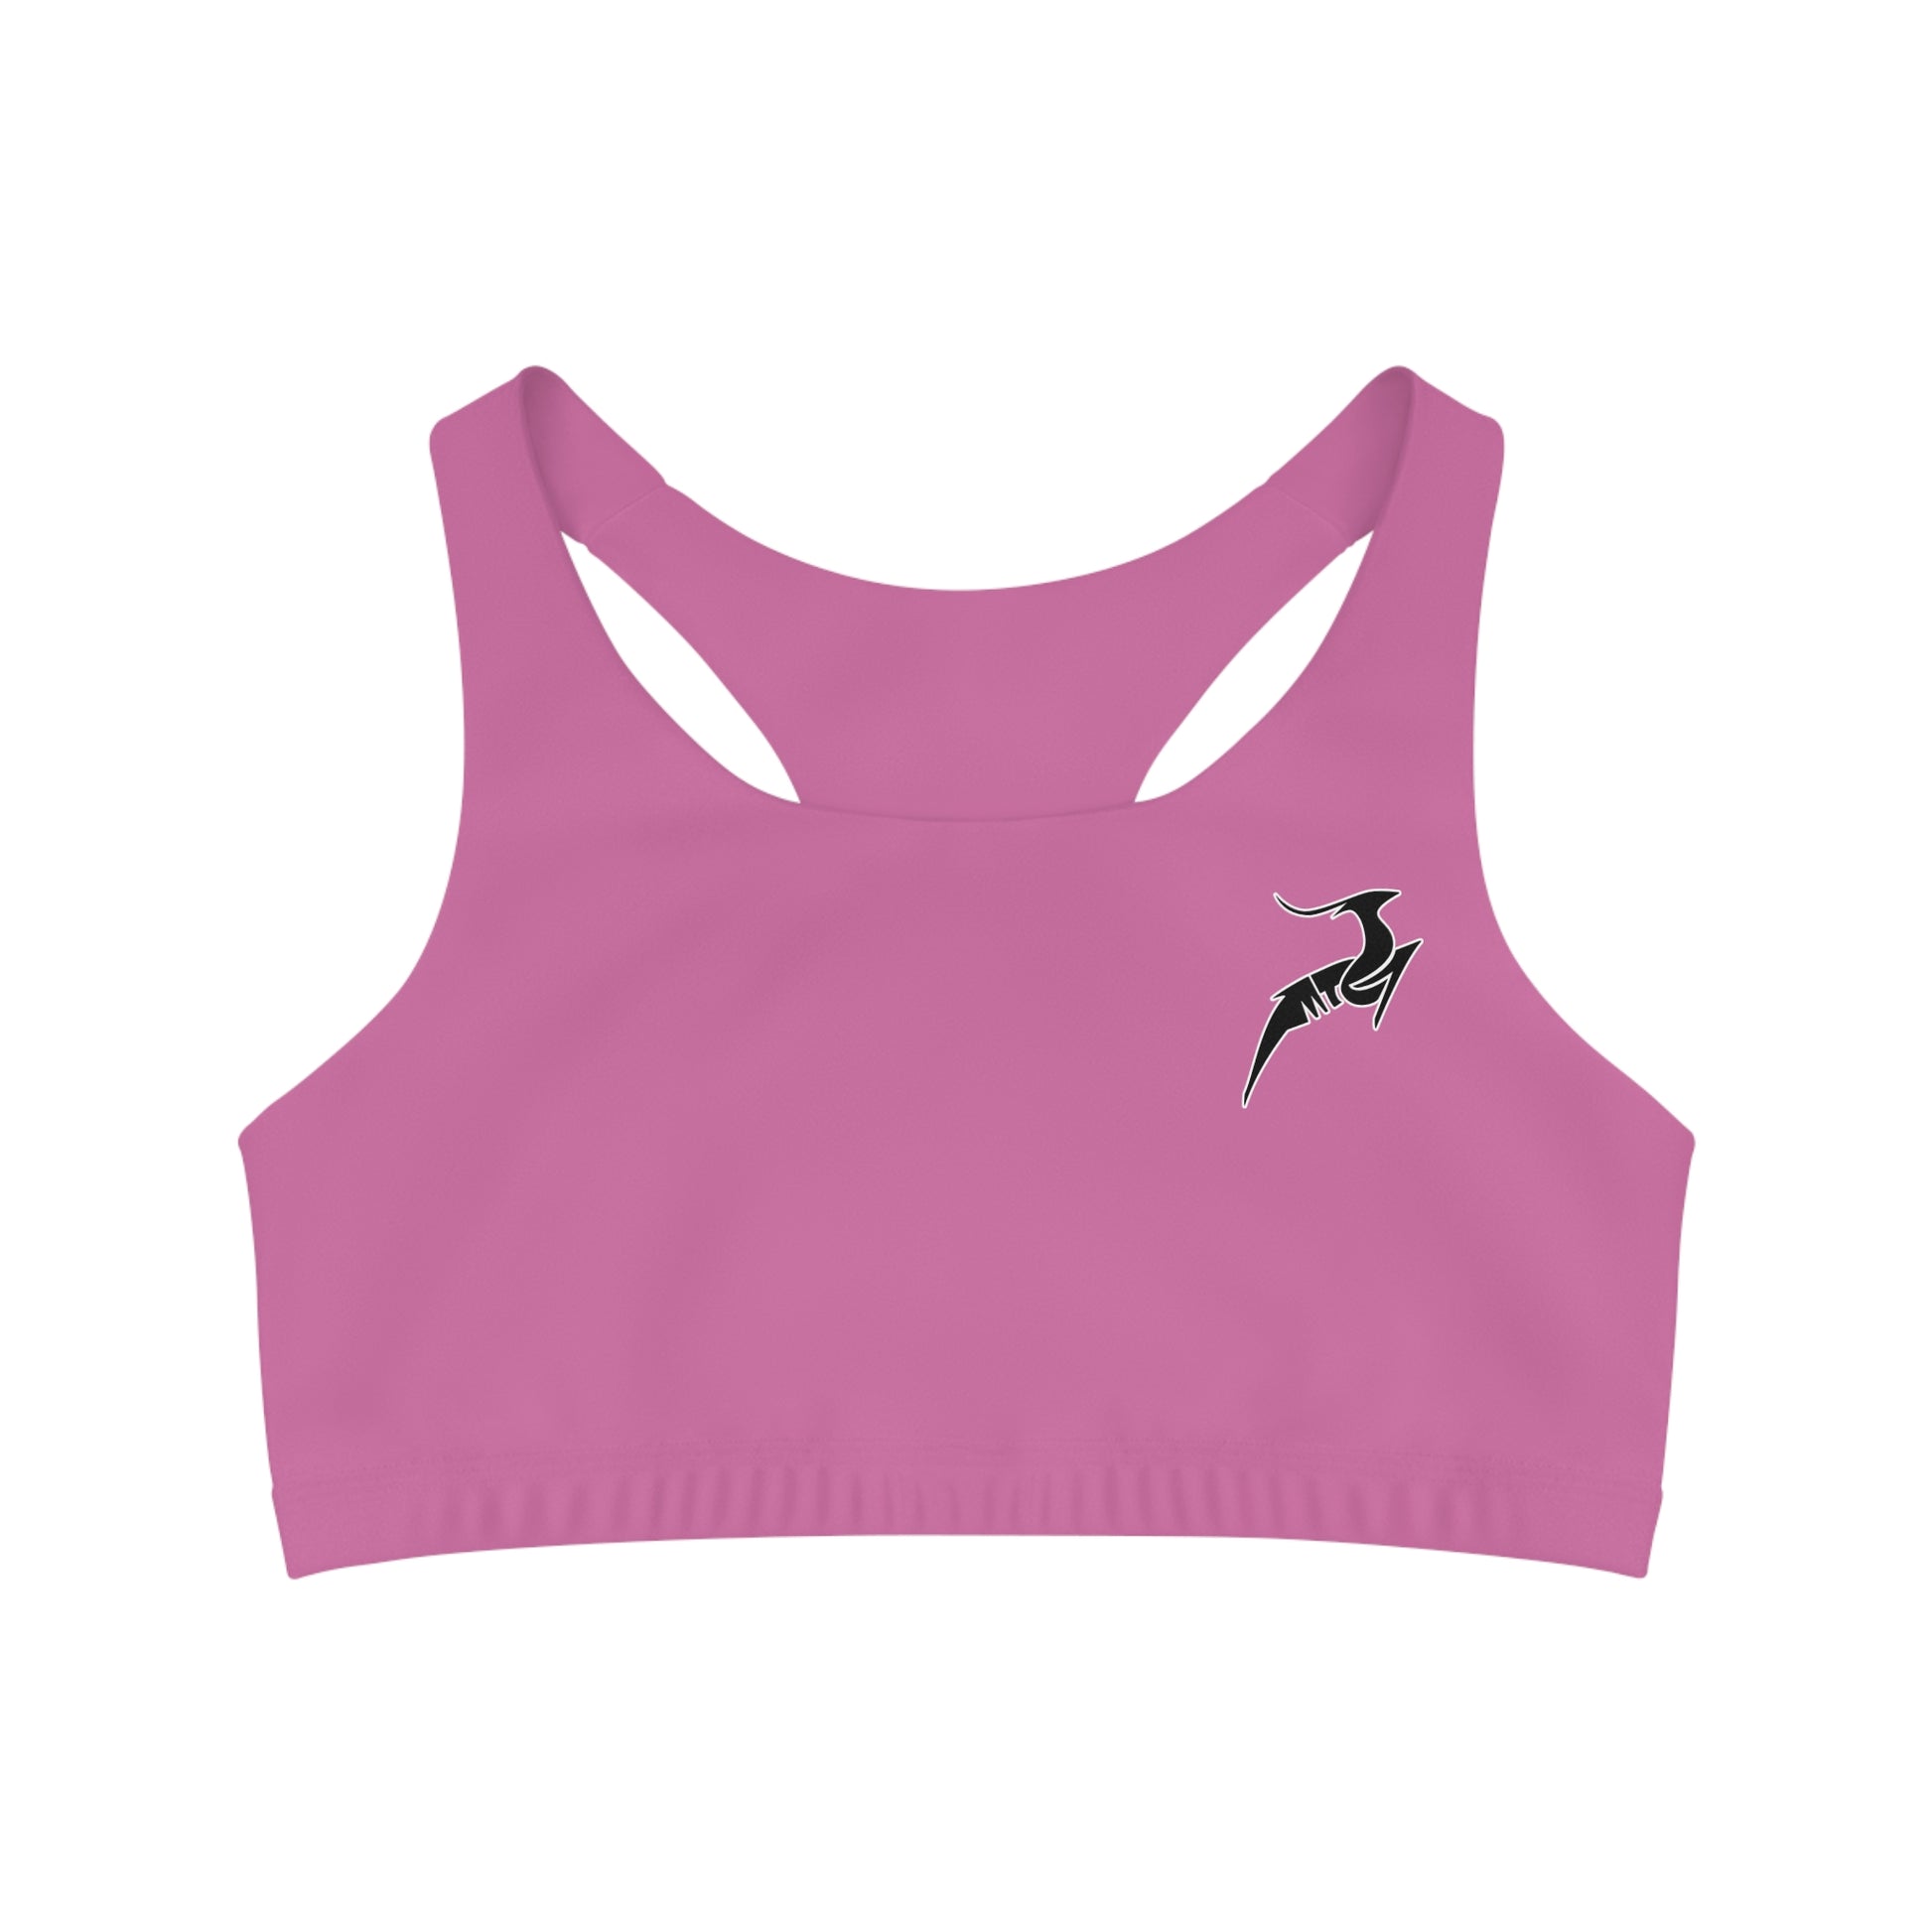 Hot Pink Sports Bra – Markelle The Gazelle